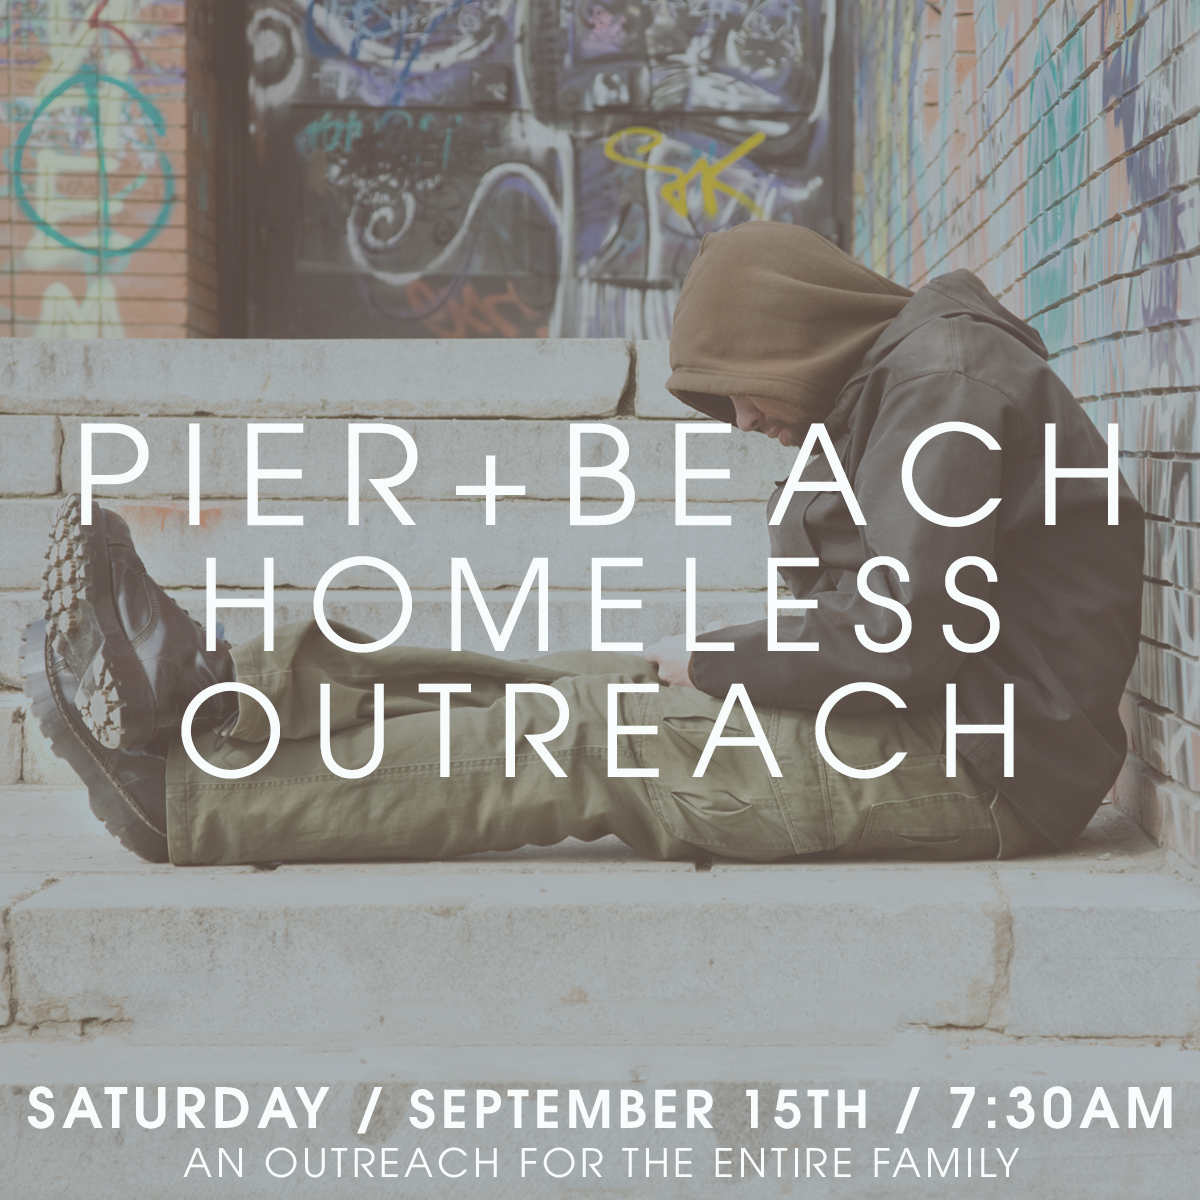 homeless outreach